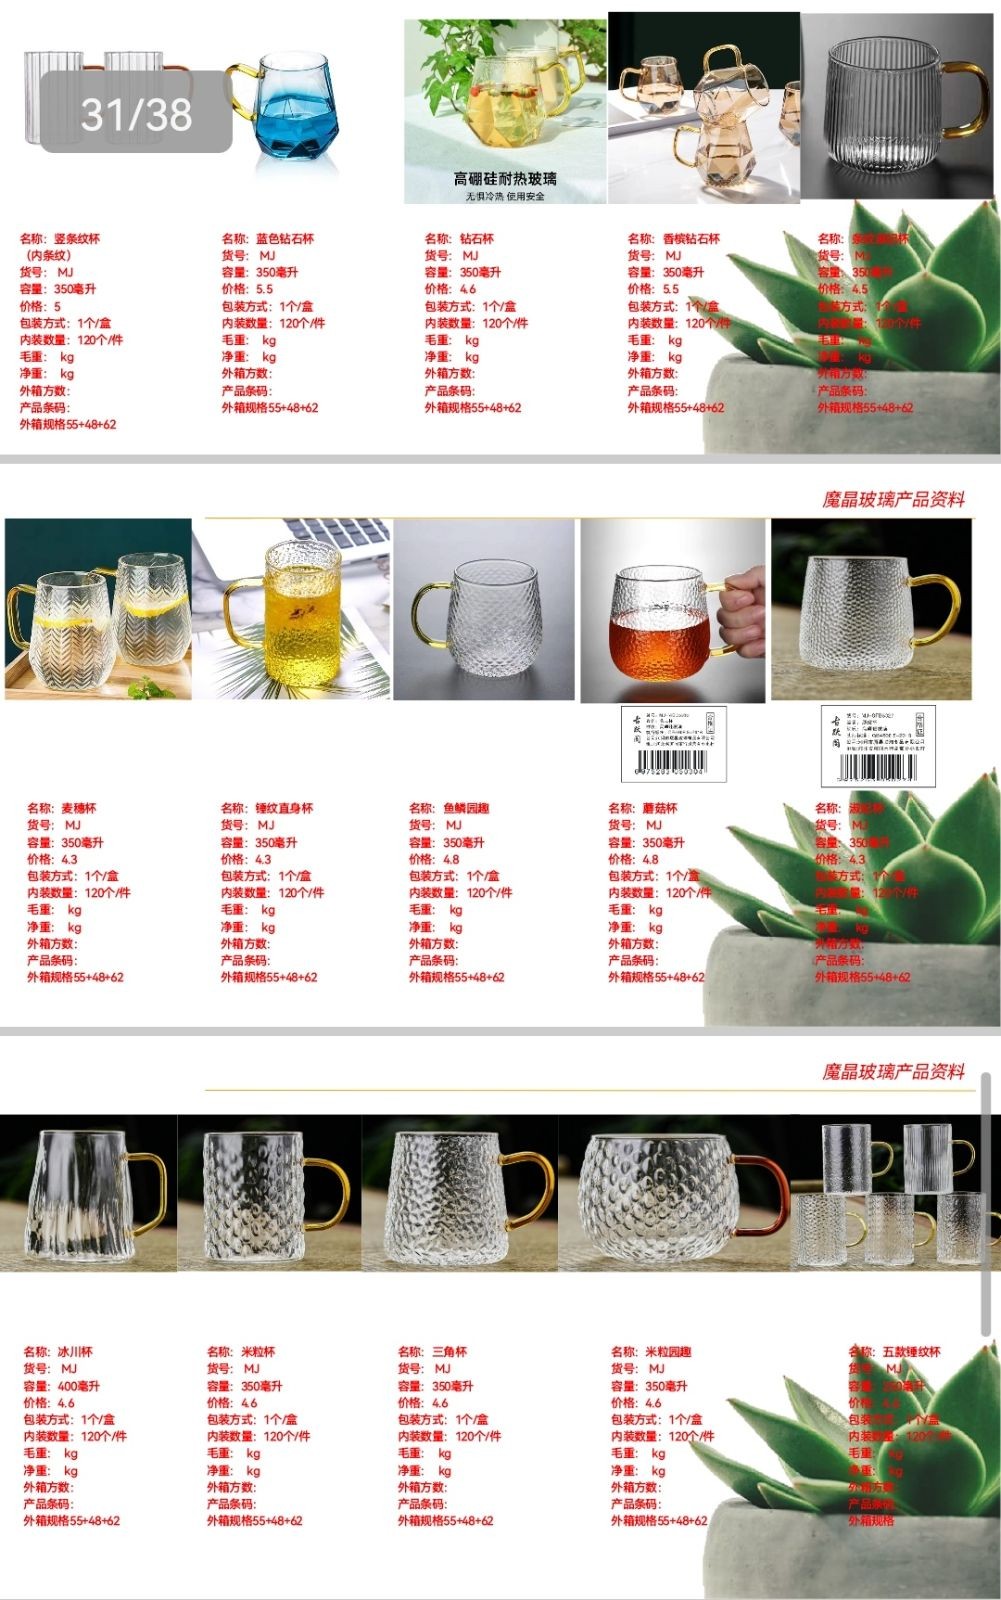 COTV直播-河间市魔晶玻璃制品有限公司专业生产销售各种时尚玻璃杯、茶具器皿等产品，欢迎大家光临！